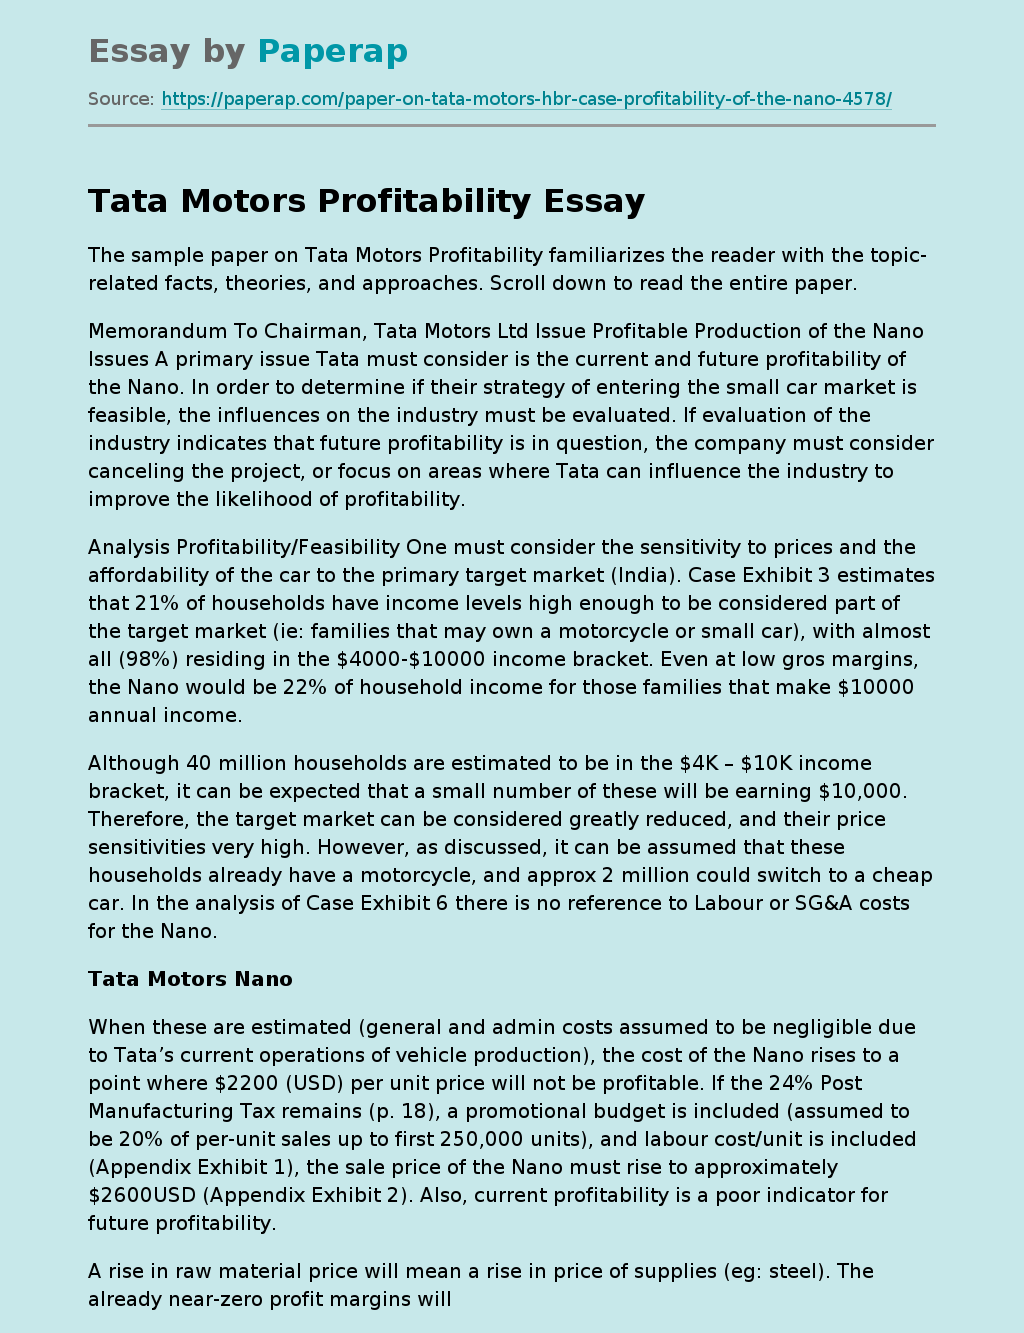 Tata Motors Profitability Article